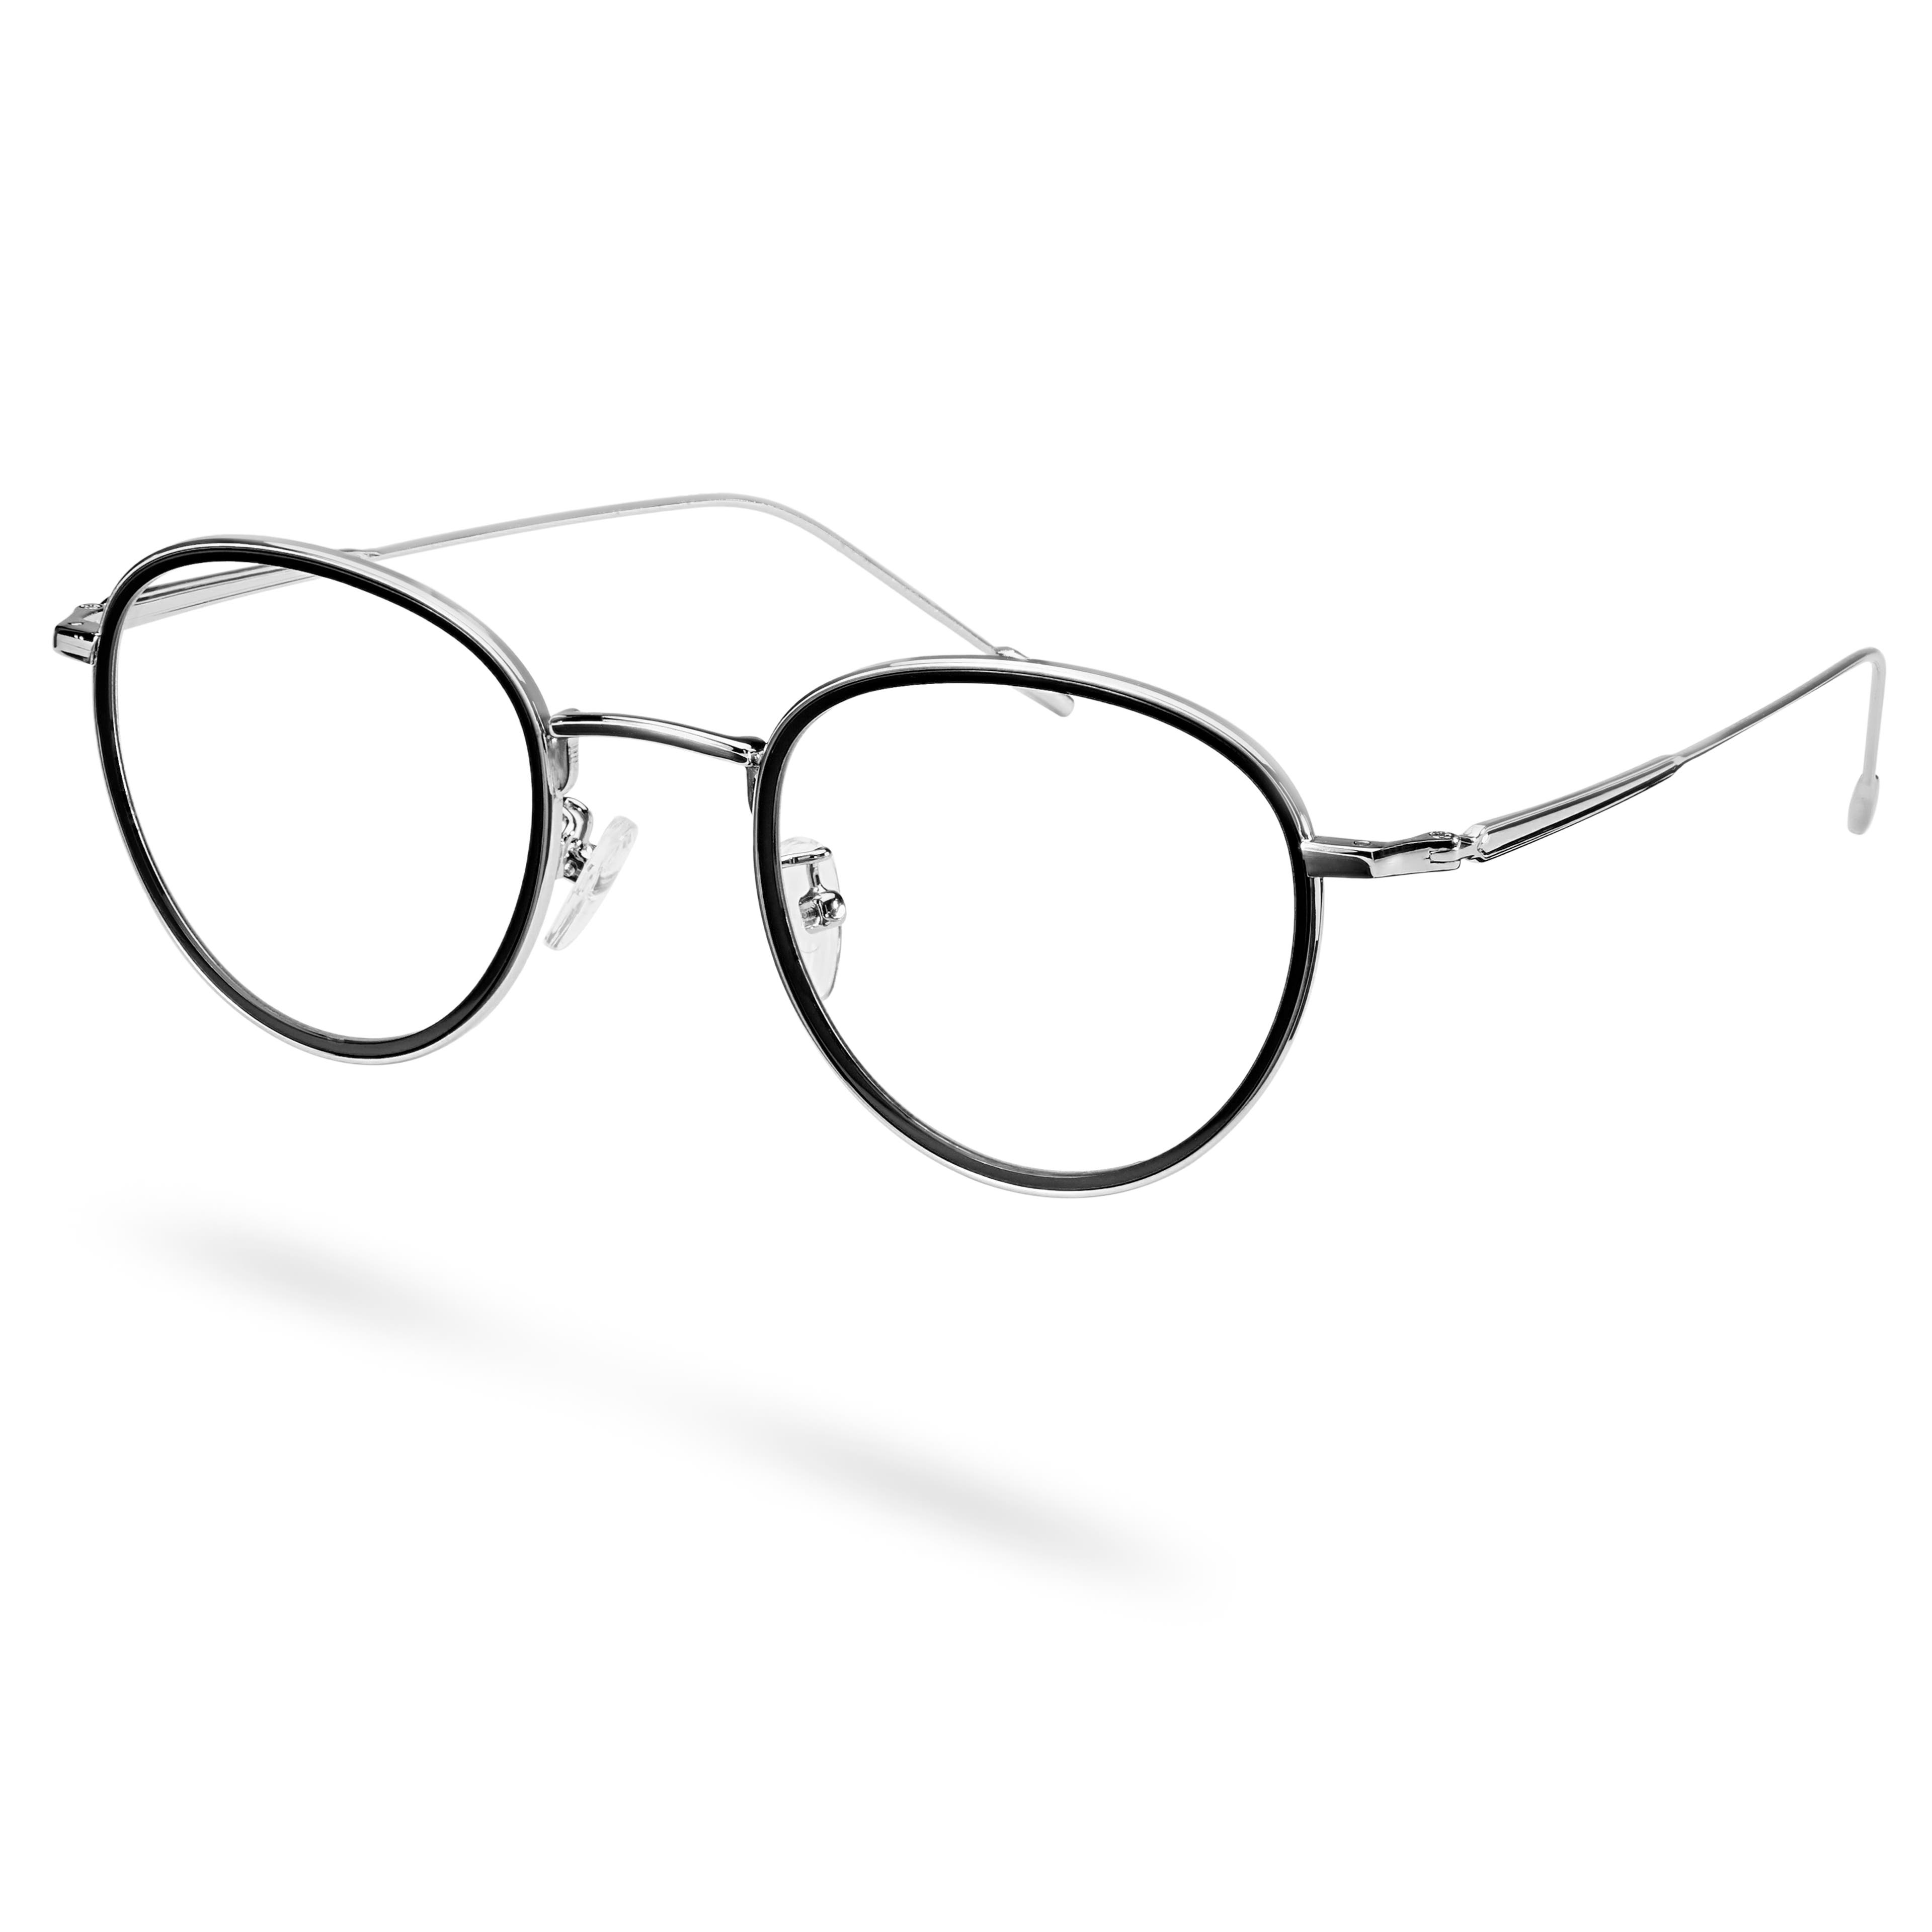 Silver-Tone & Black Atrium Clear Lens Glasses